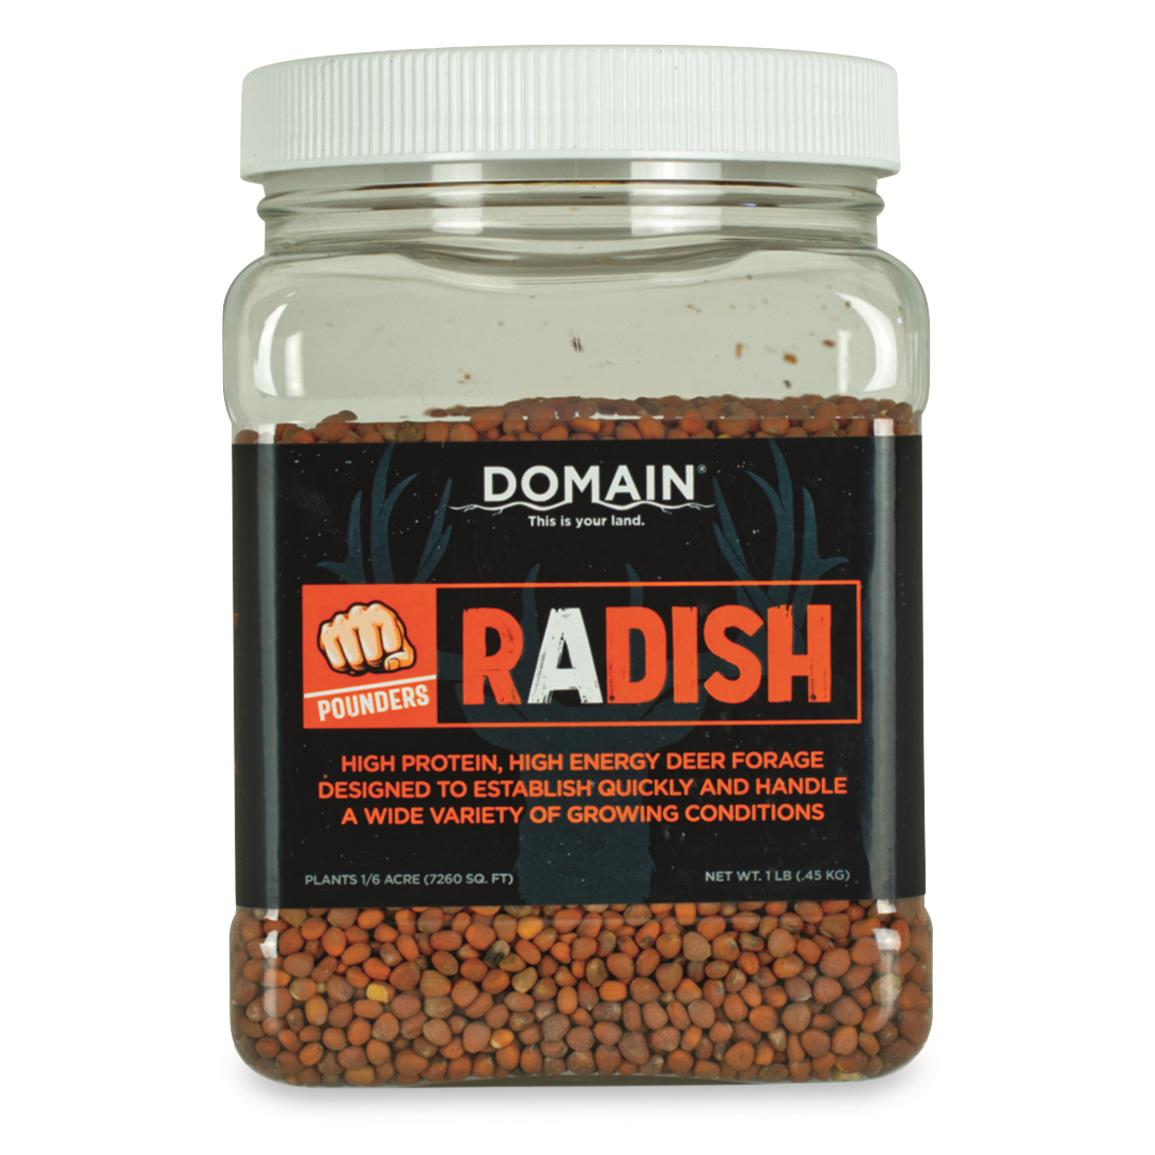 Domain Pounder Radish Food Plot Seed, 1 lb.